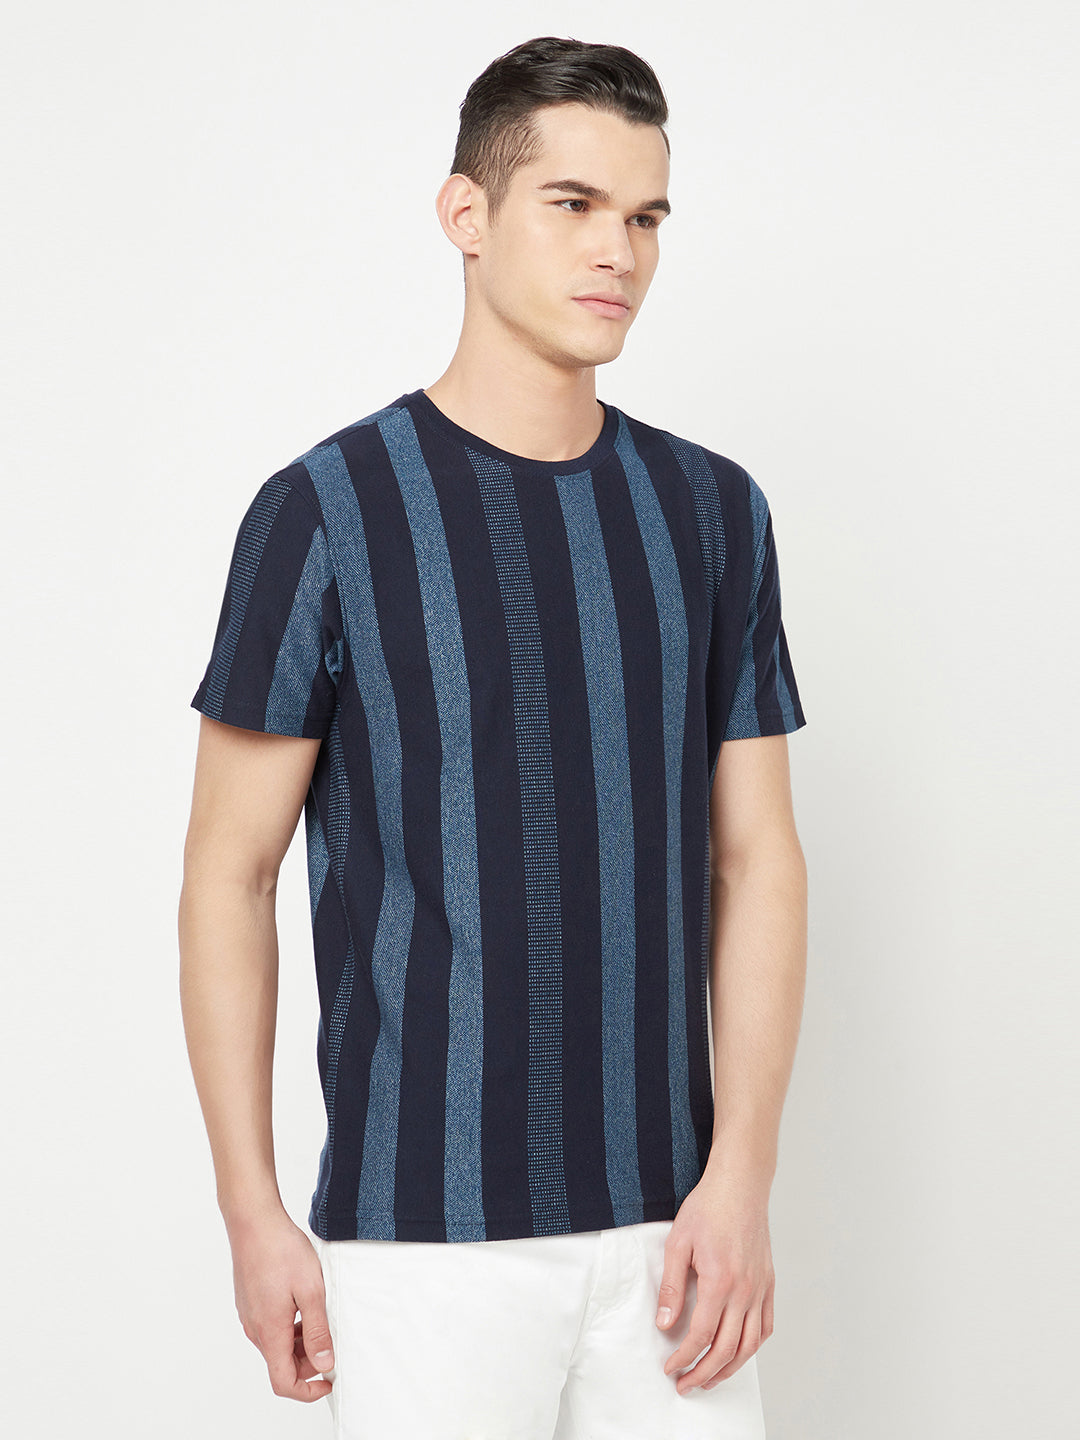 Navy Blue Striped Round Neck T-Shirt - Men T-Shirts